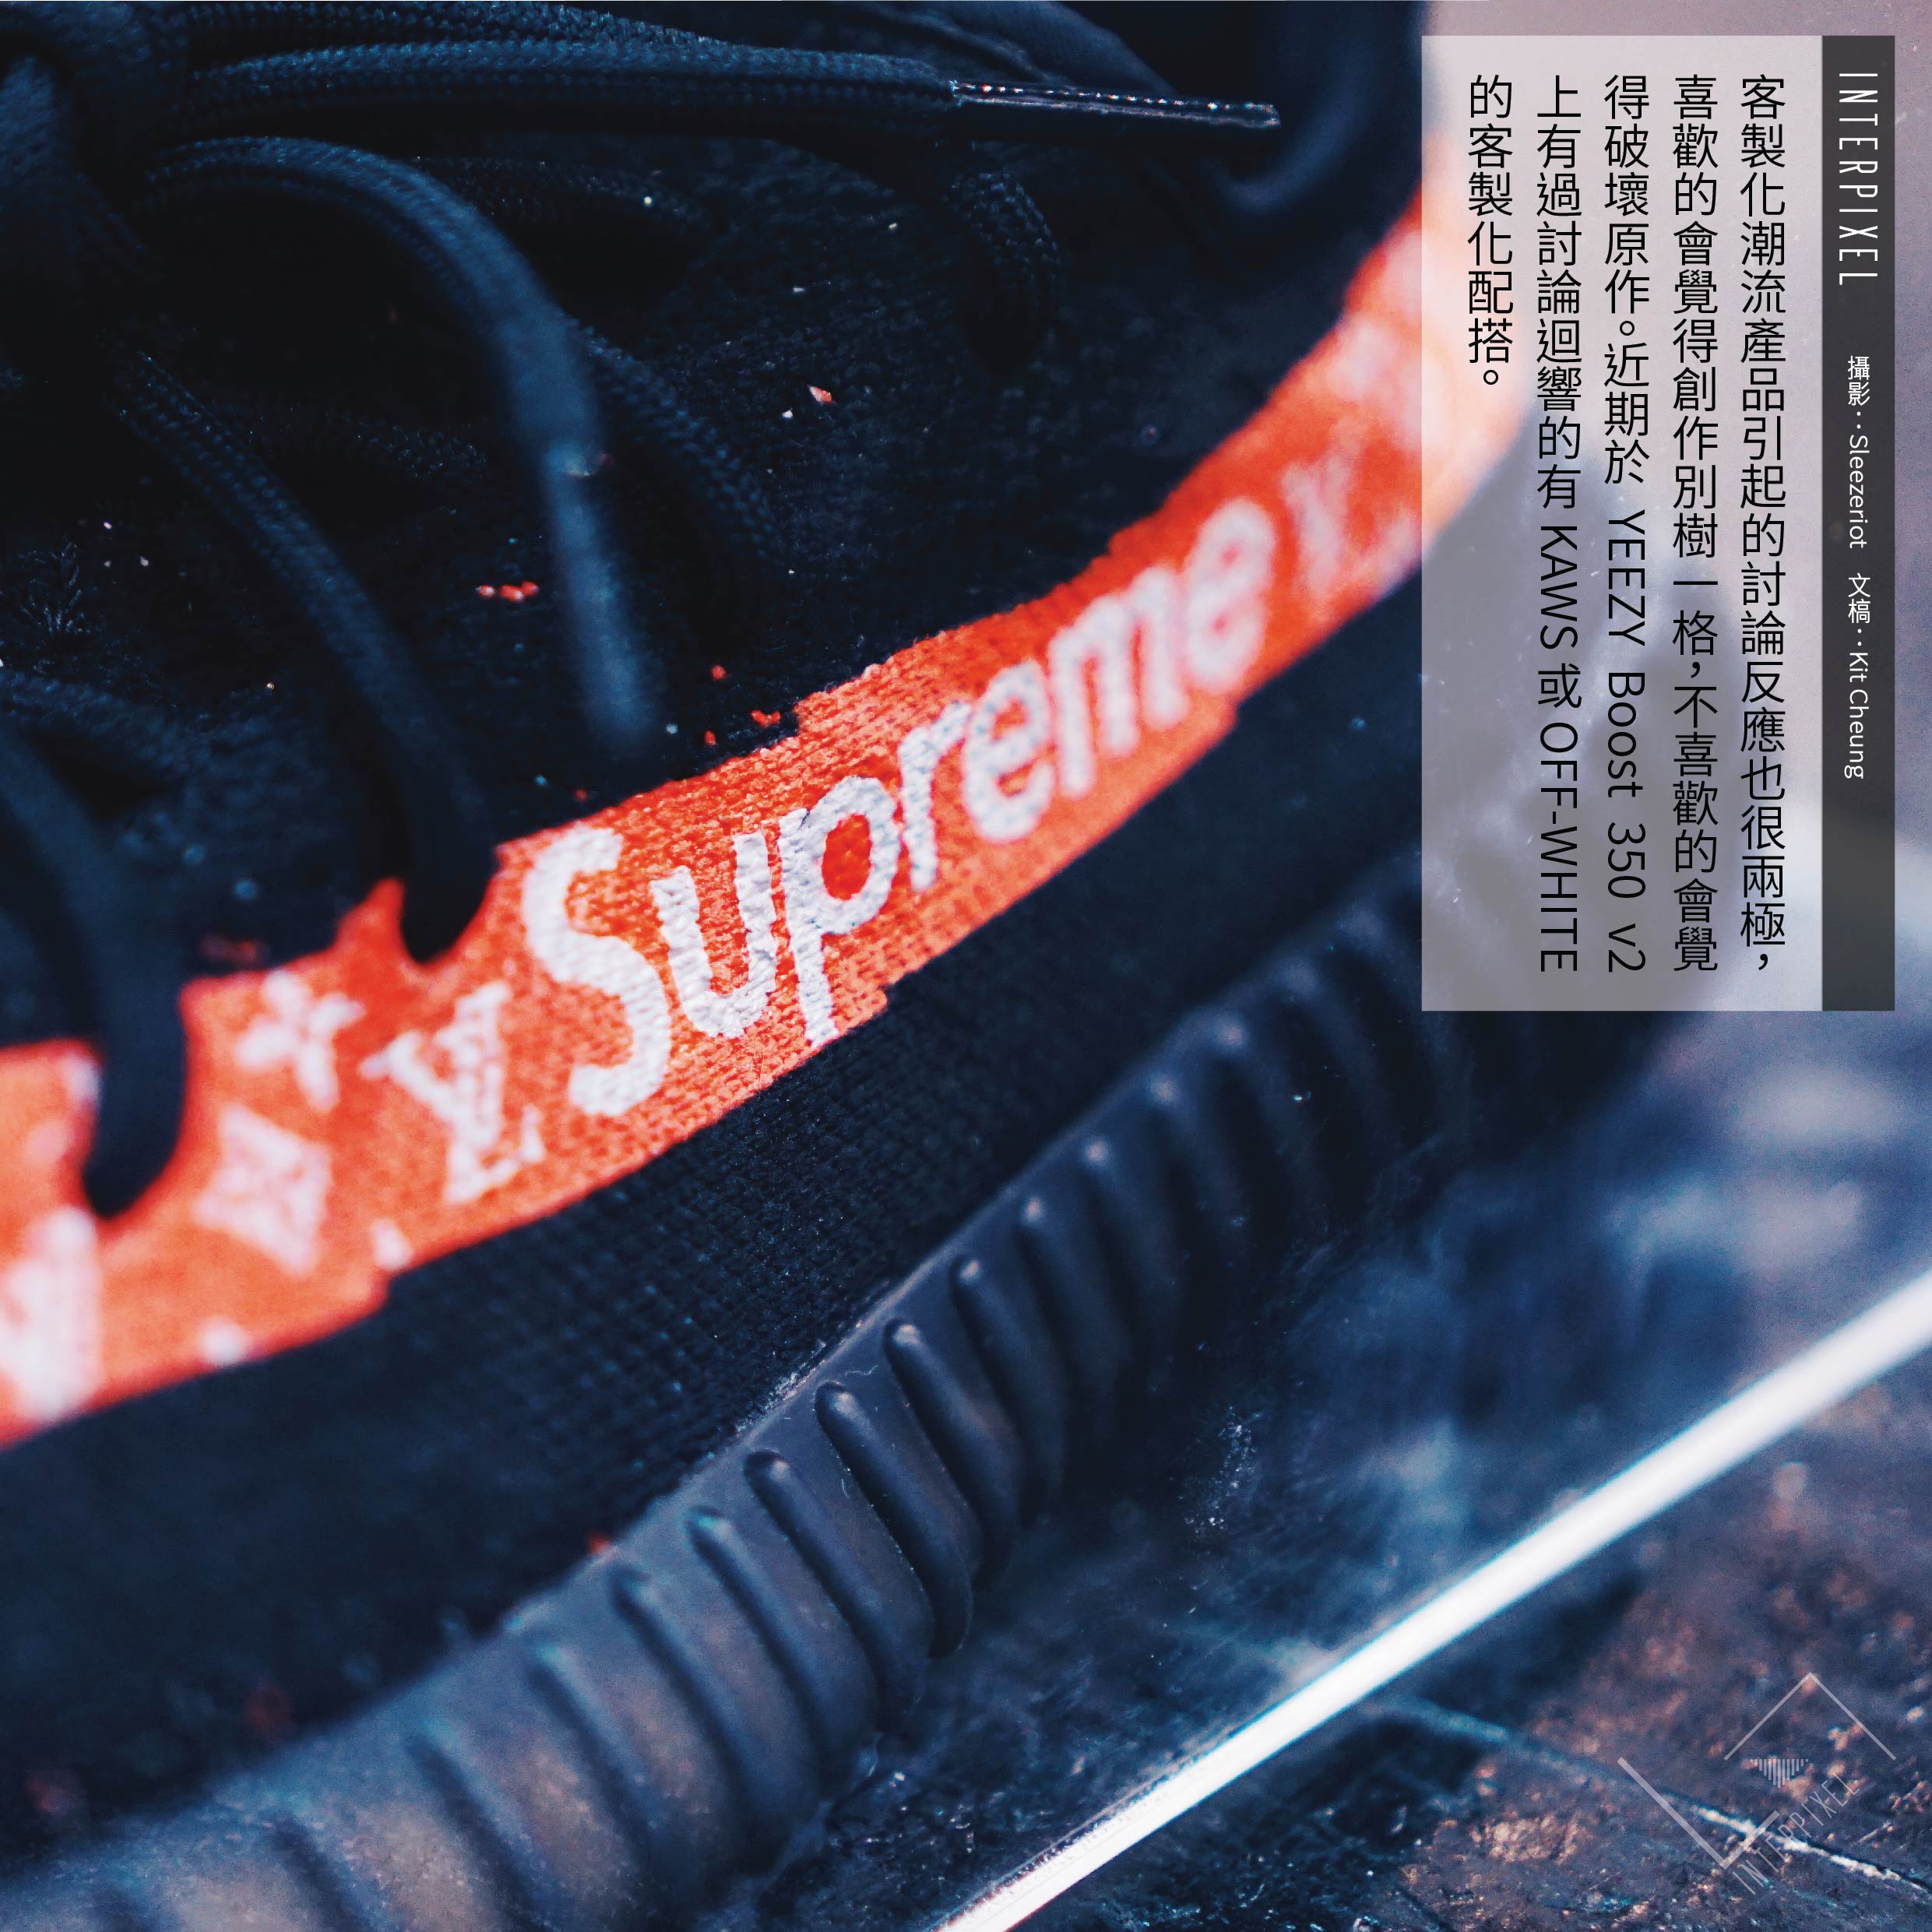 Custom Made Collection on X: Supreme x LV Yeezy - @AngelusDirect  @AngelusBrand #Yeezy  / X